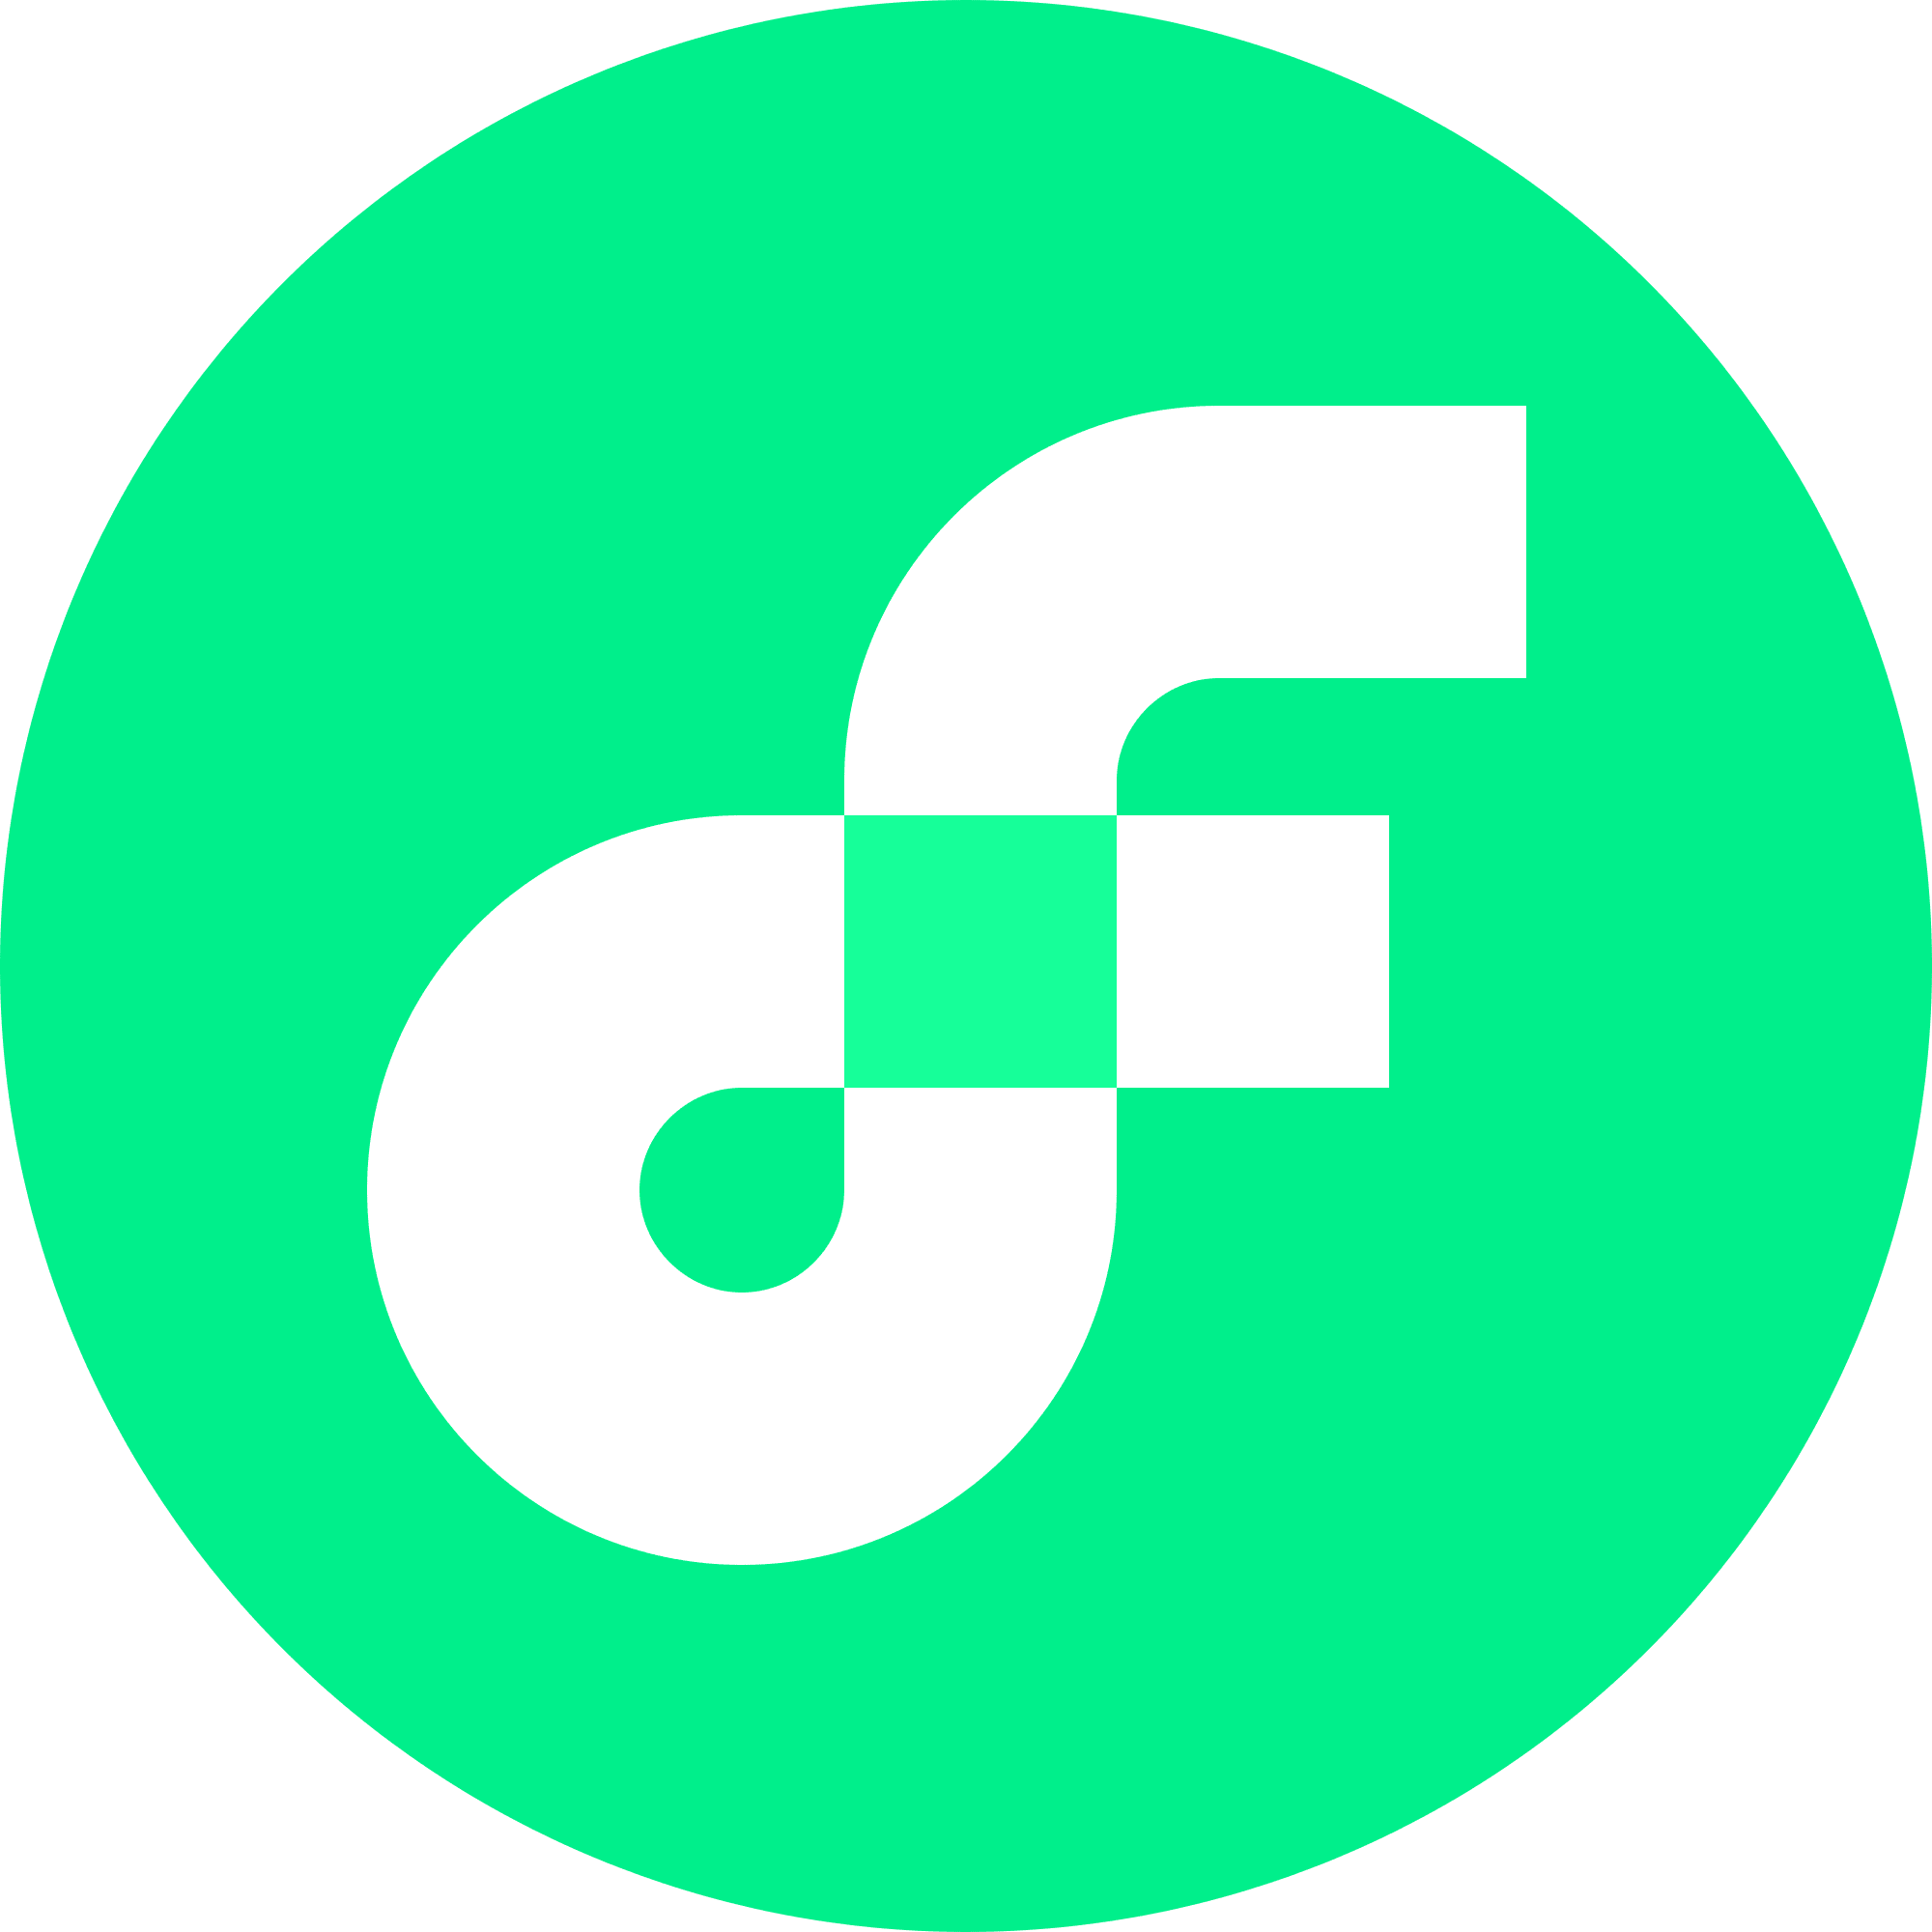 Flow logo in png format